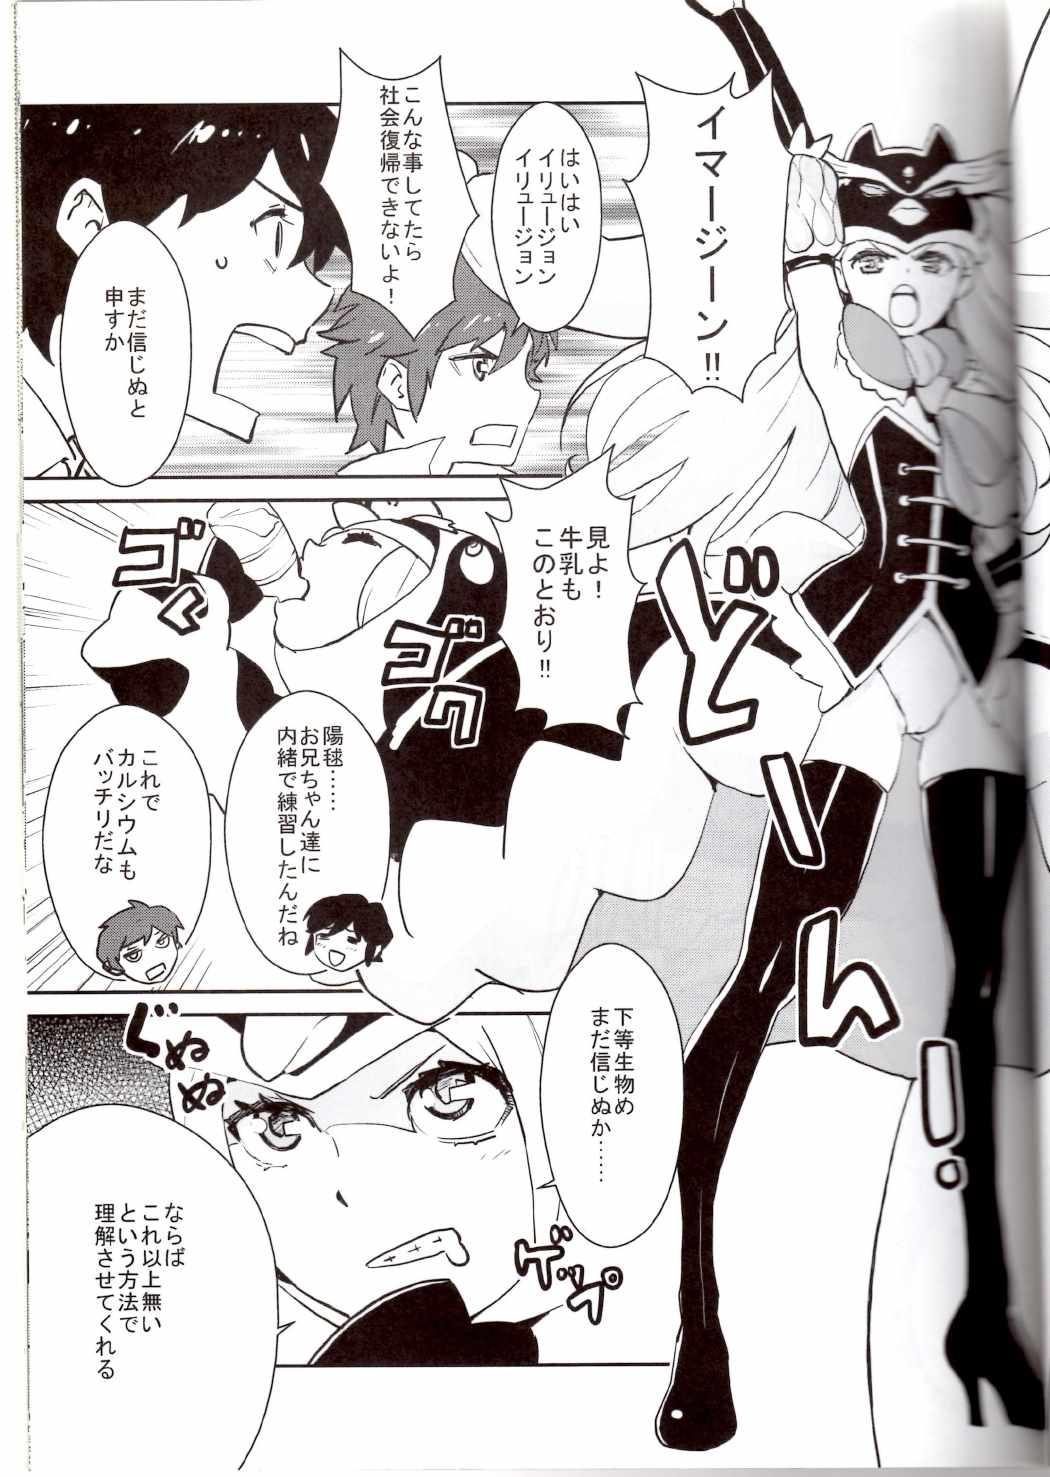 Secret Cat Star! - Steinsgate Ano hi mita hana no namae wo bokutachi wa mada shiranai Mawaru penguindrum Female Domination - Page 4